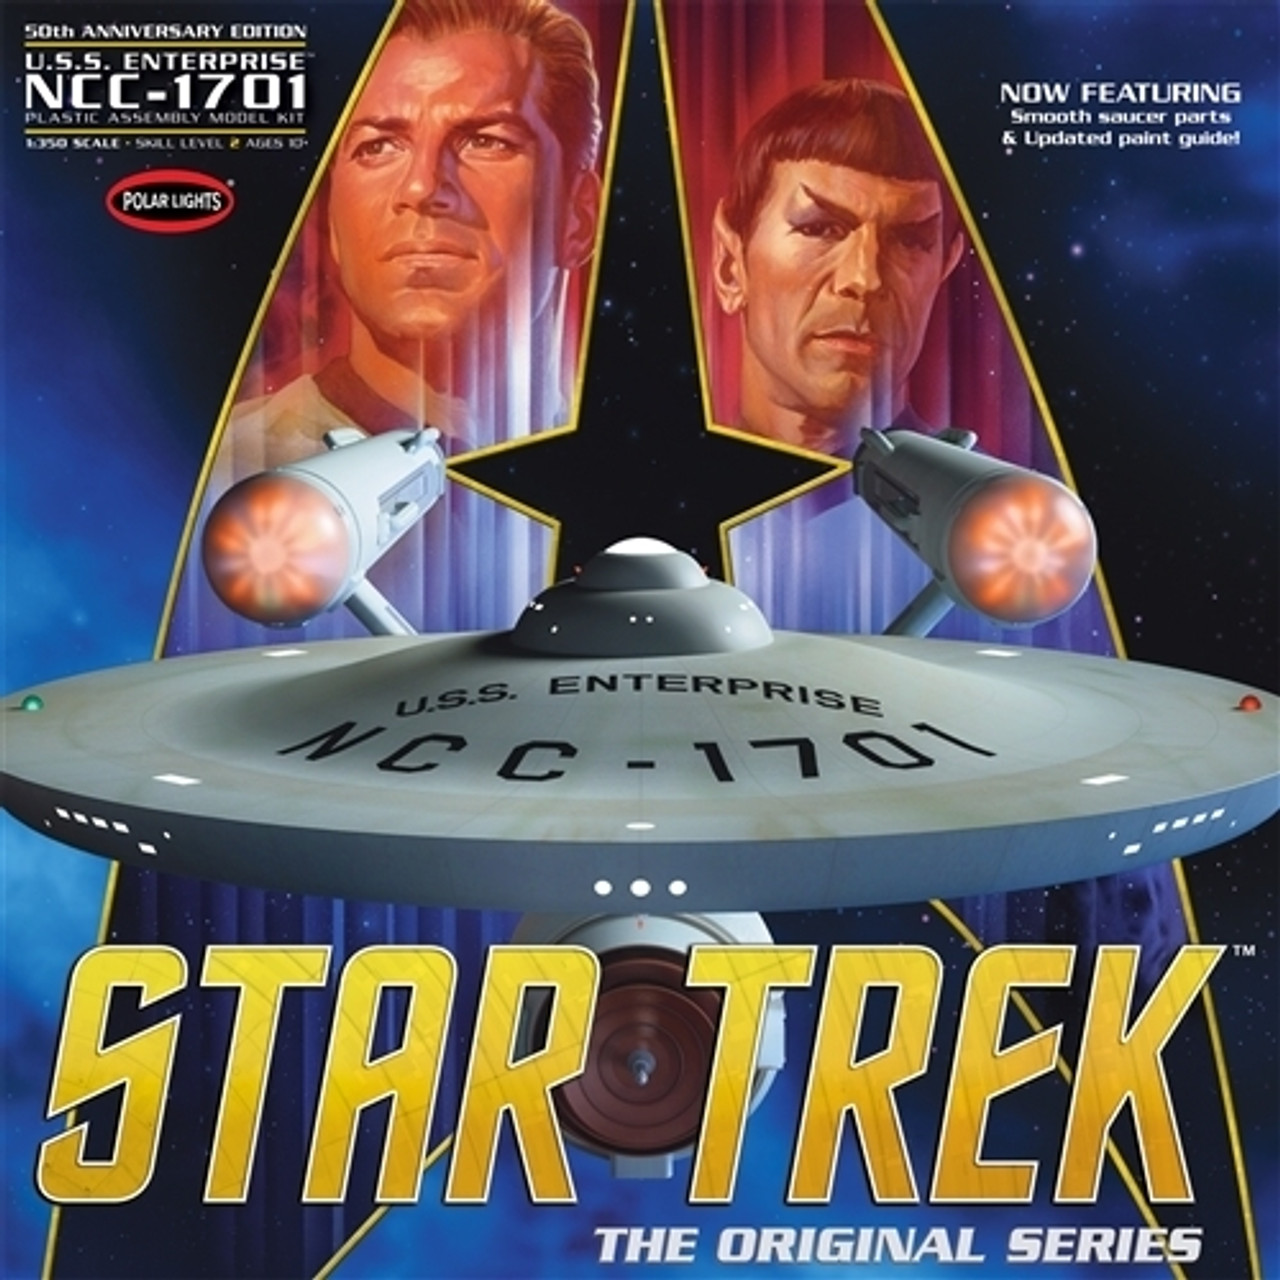 938 STAR TREK TOS ENTERPRISE NCC-1701 50TH ANNIVERSARY EDITION 1:350 SCALE MODEL KIT